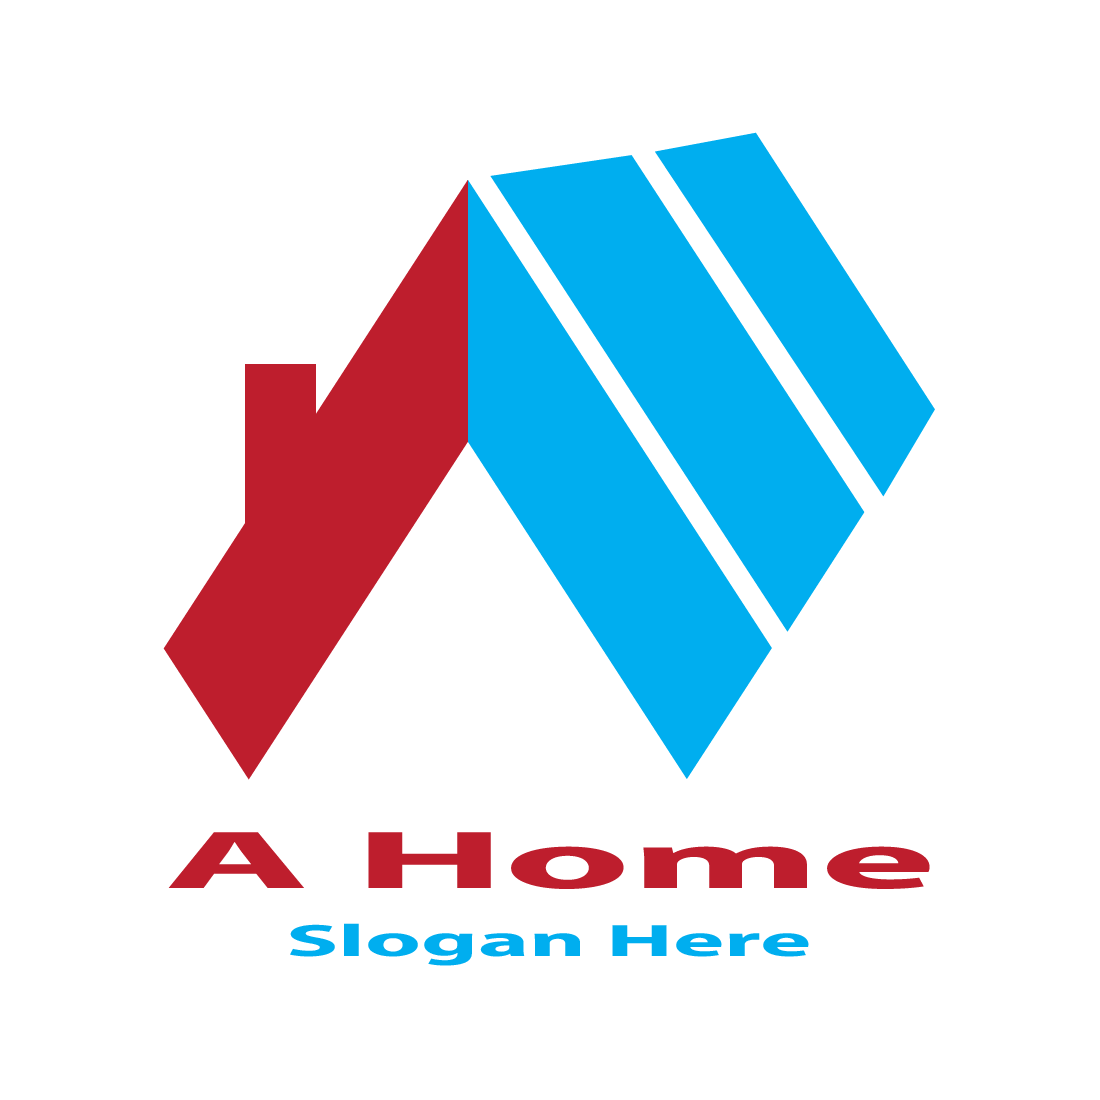 Real Estate Design Logo red and blue version.